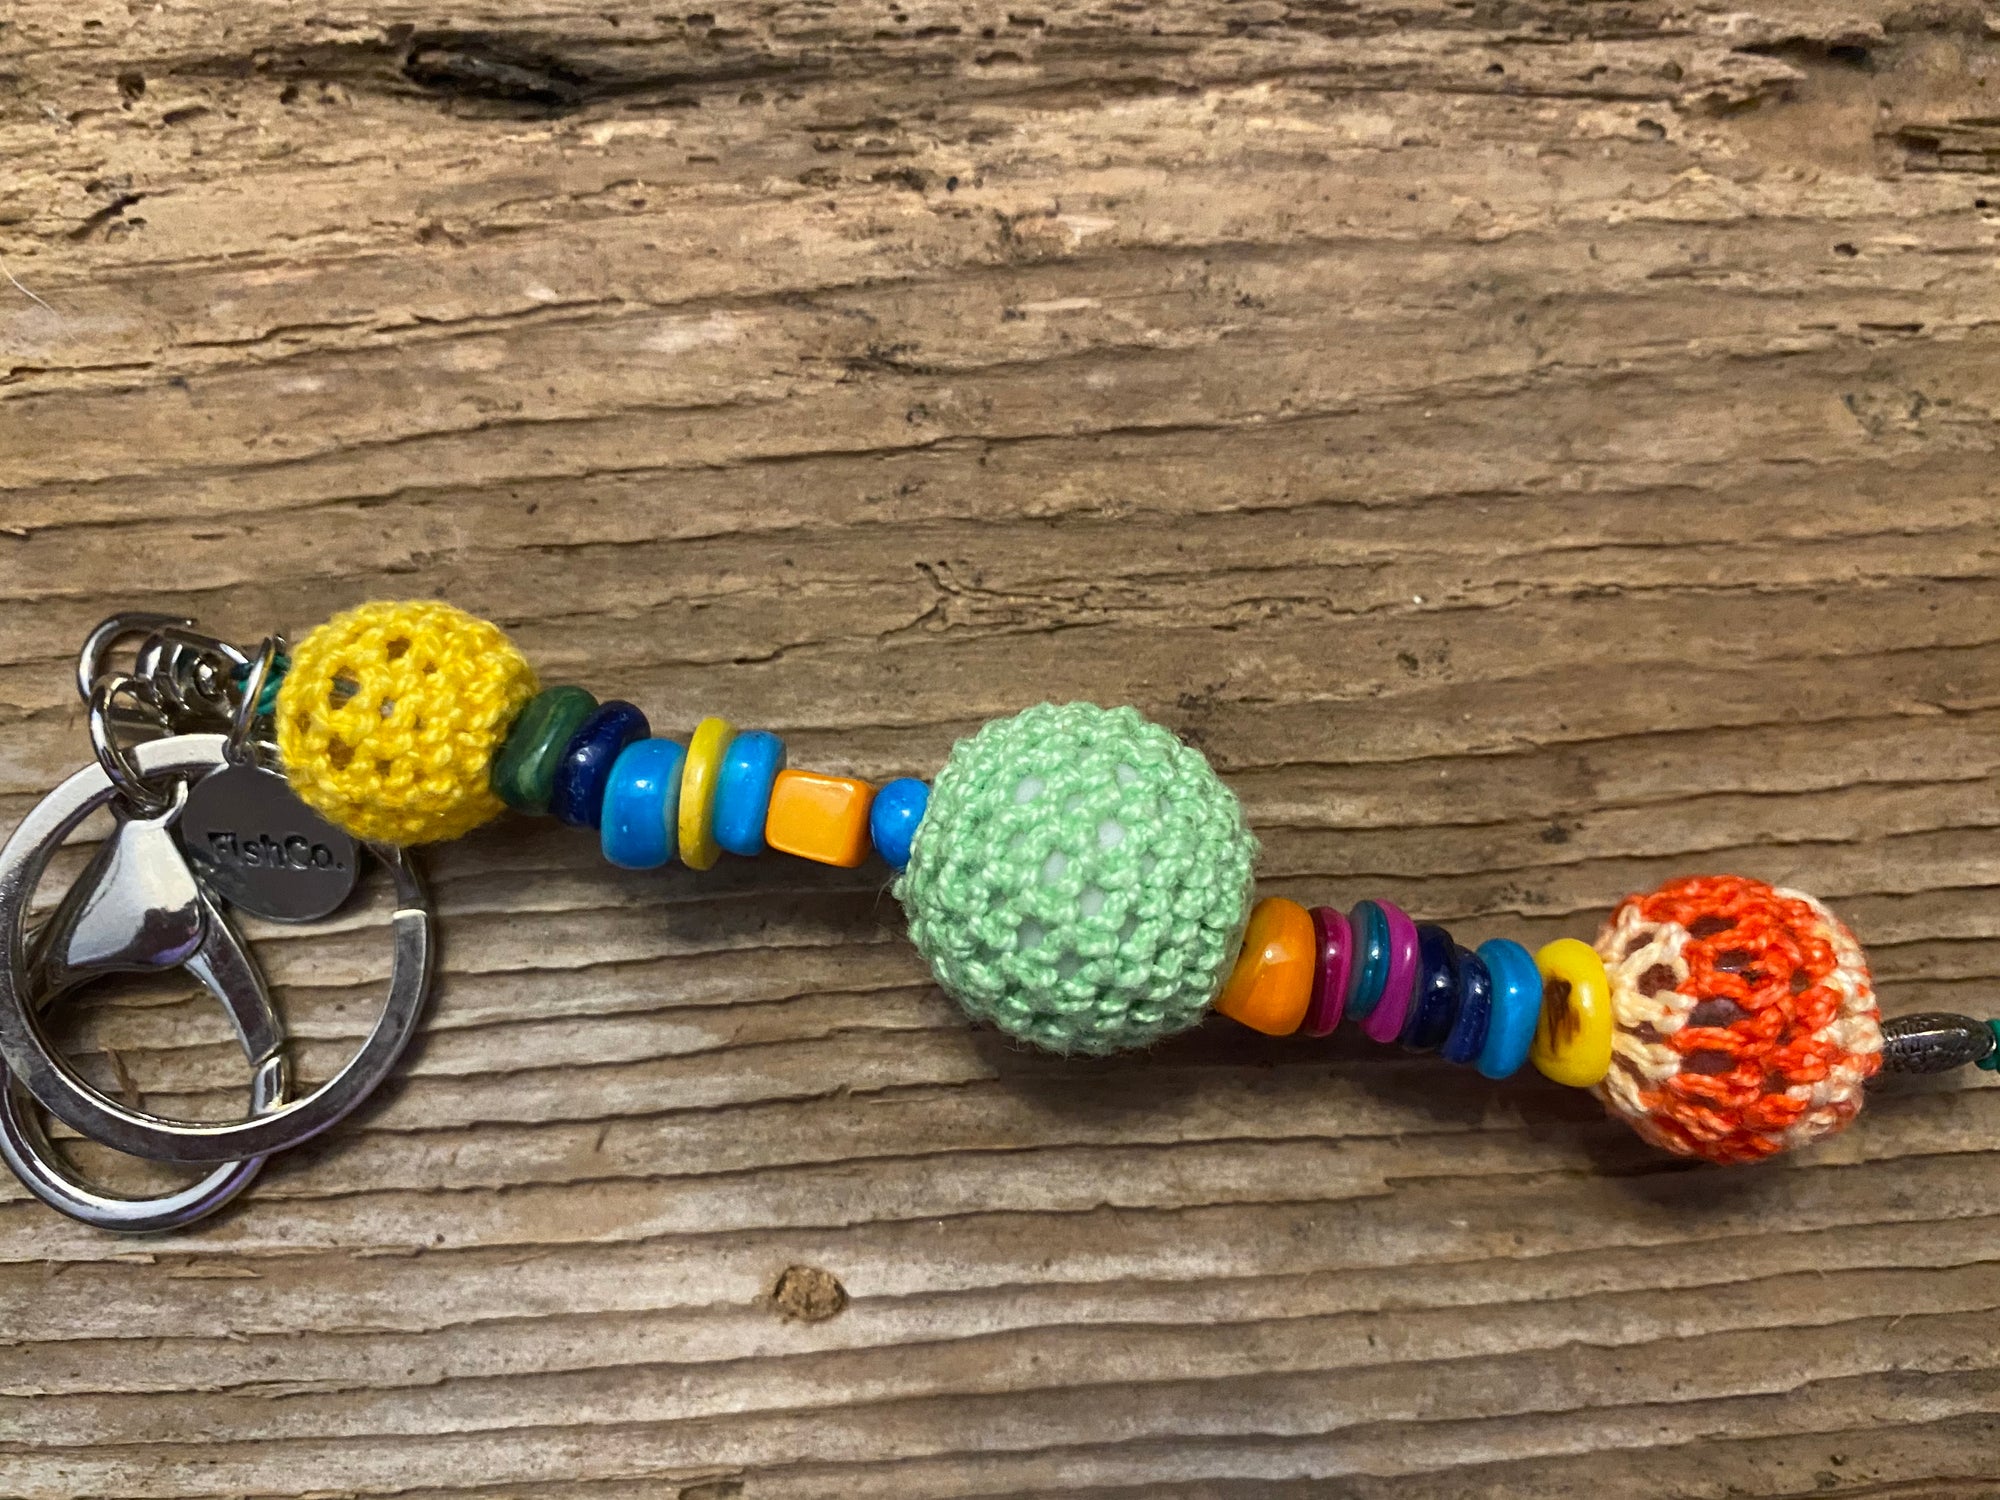 Shanga Keychain lemon, mint and orange macrame beads with colorful stone accents